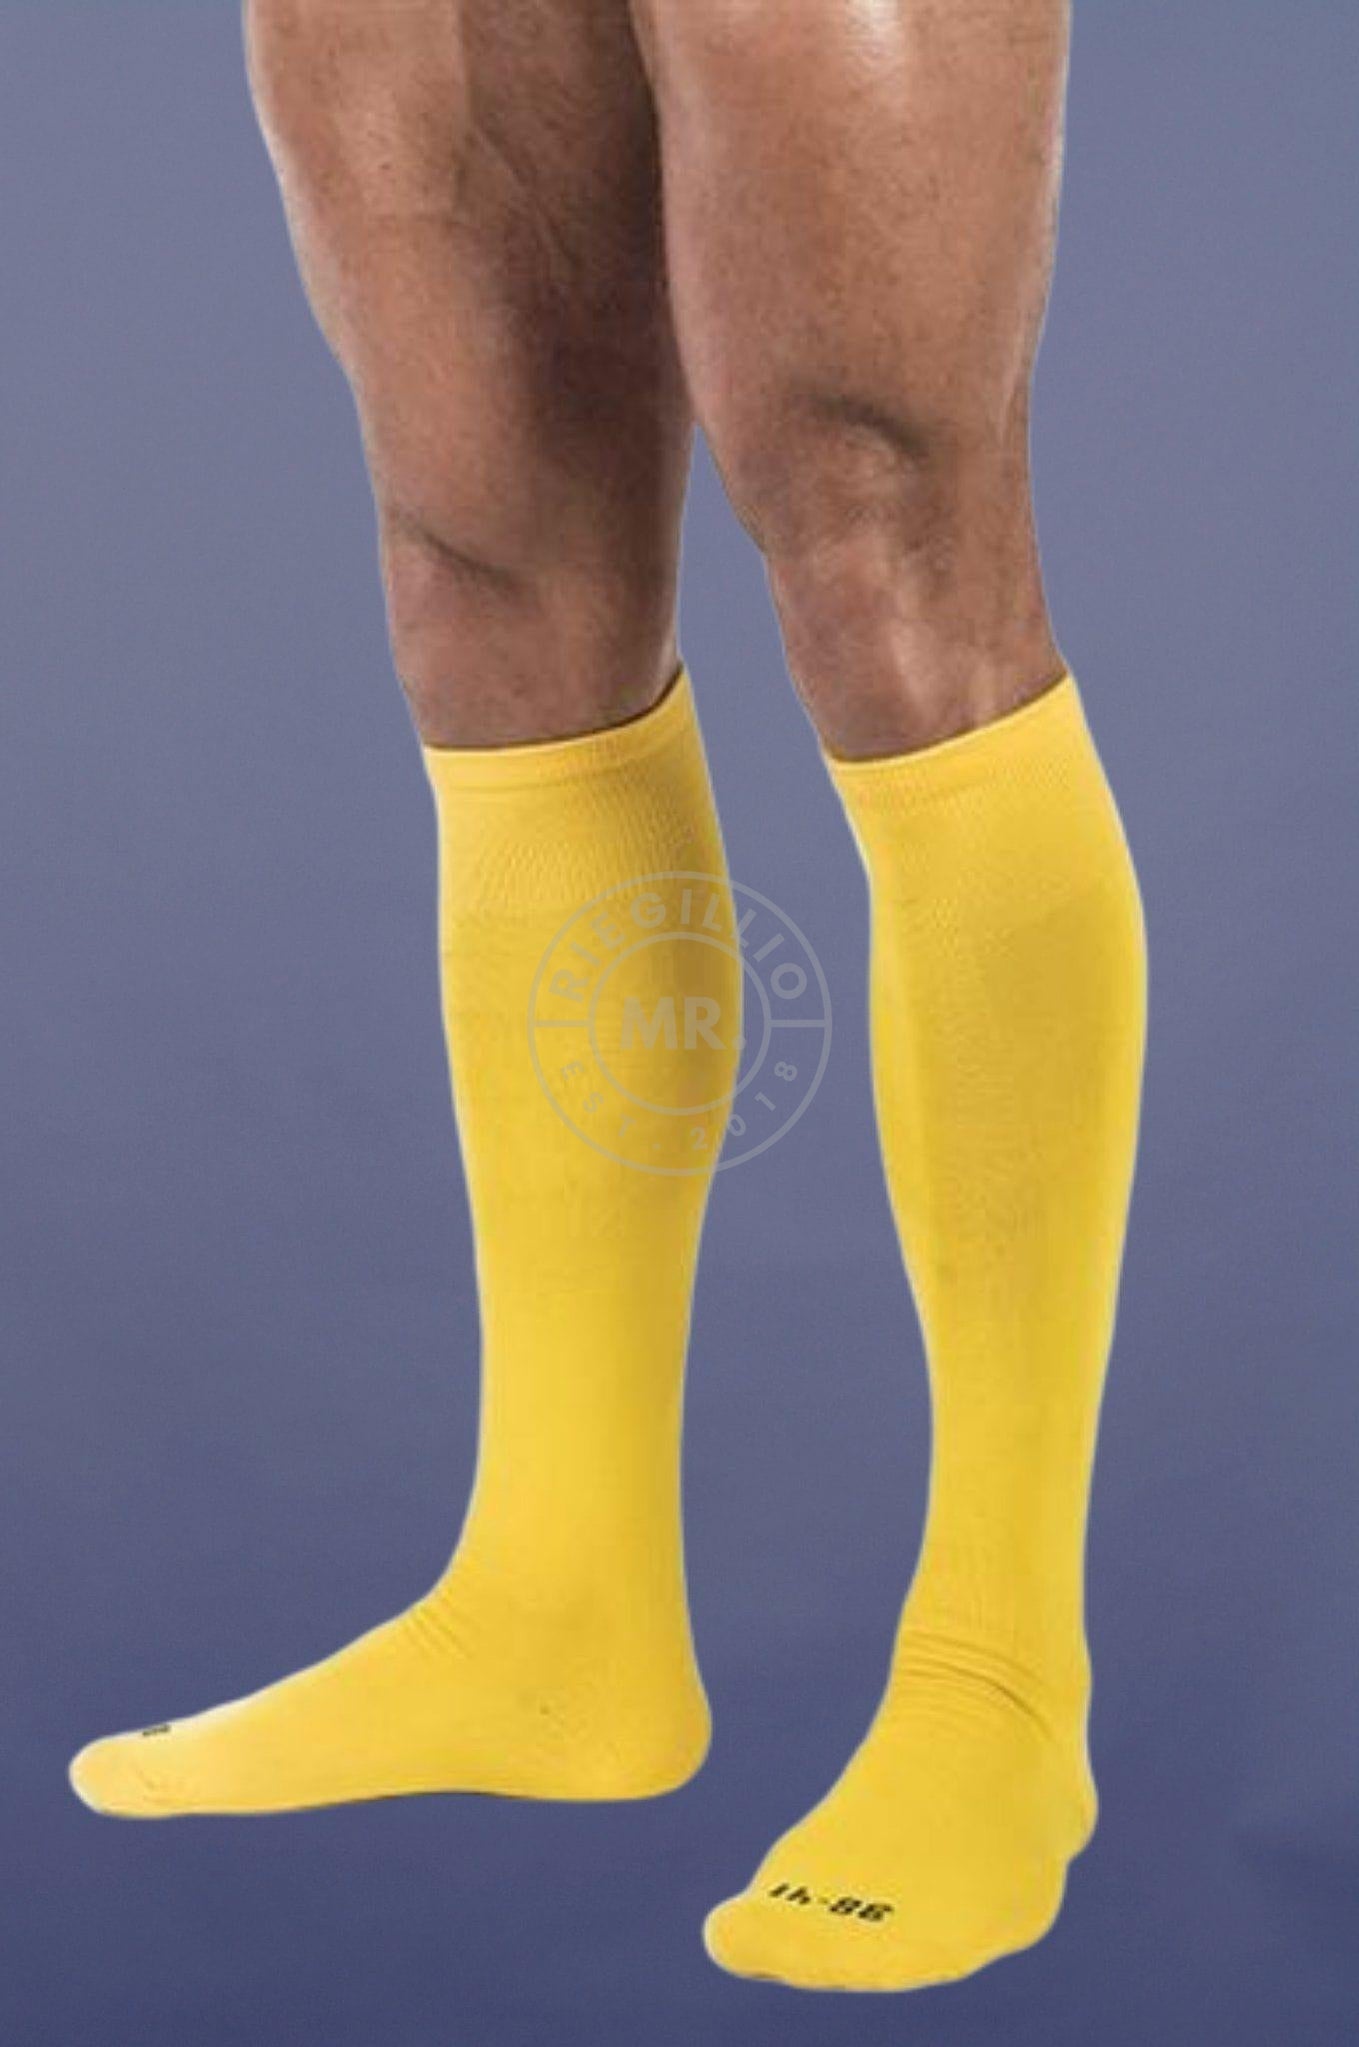 Football Socks Yellow at MR. Riegillio